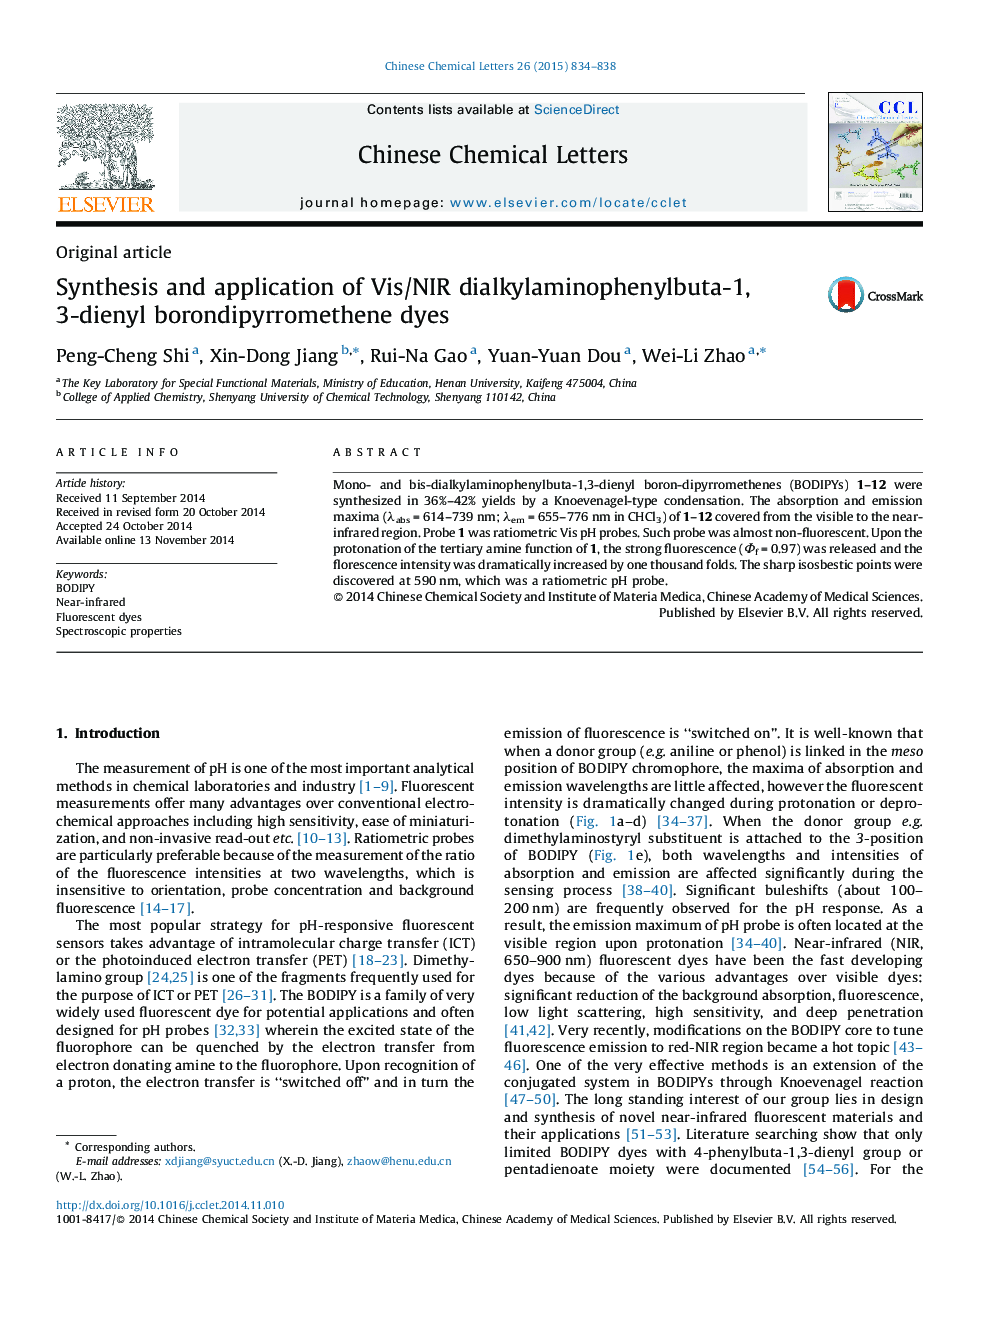 Synthesis and application of Vis/NIR dialkylaminophenylbuta-1,3-dienyl borondipyrromethene dyes